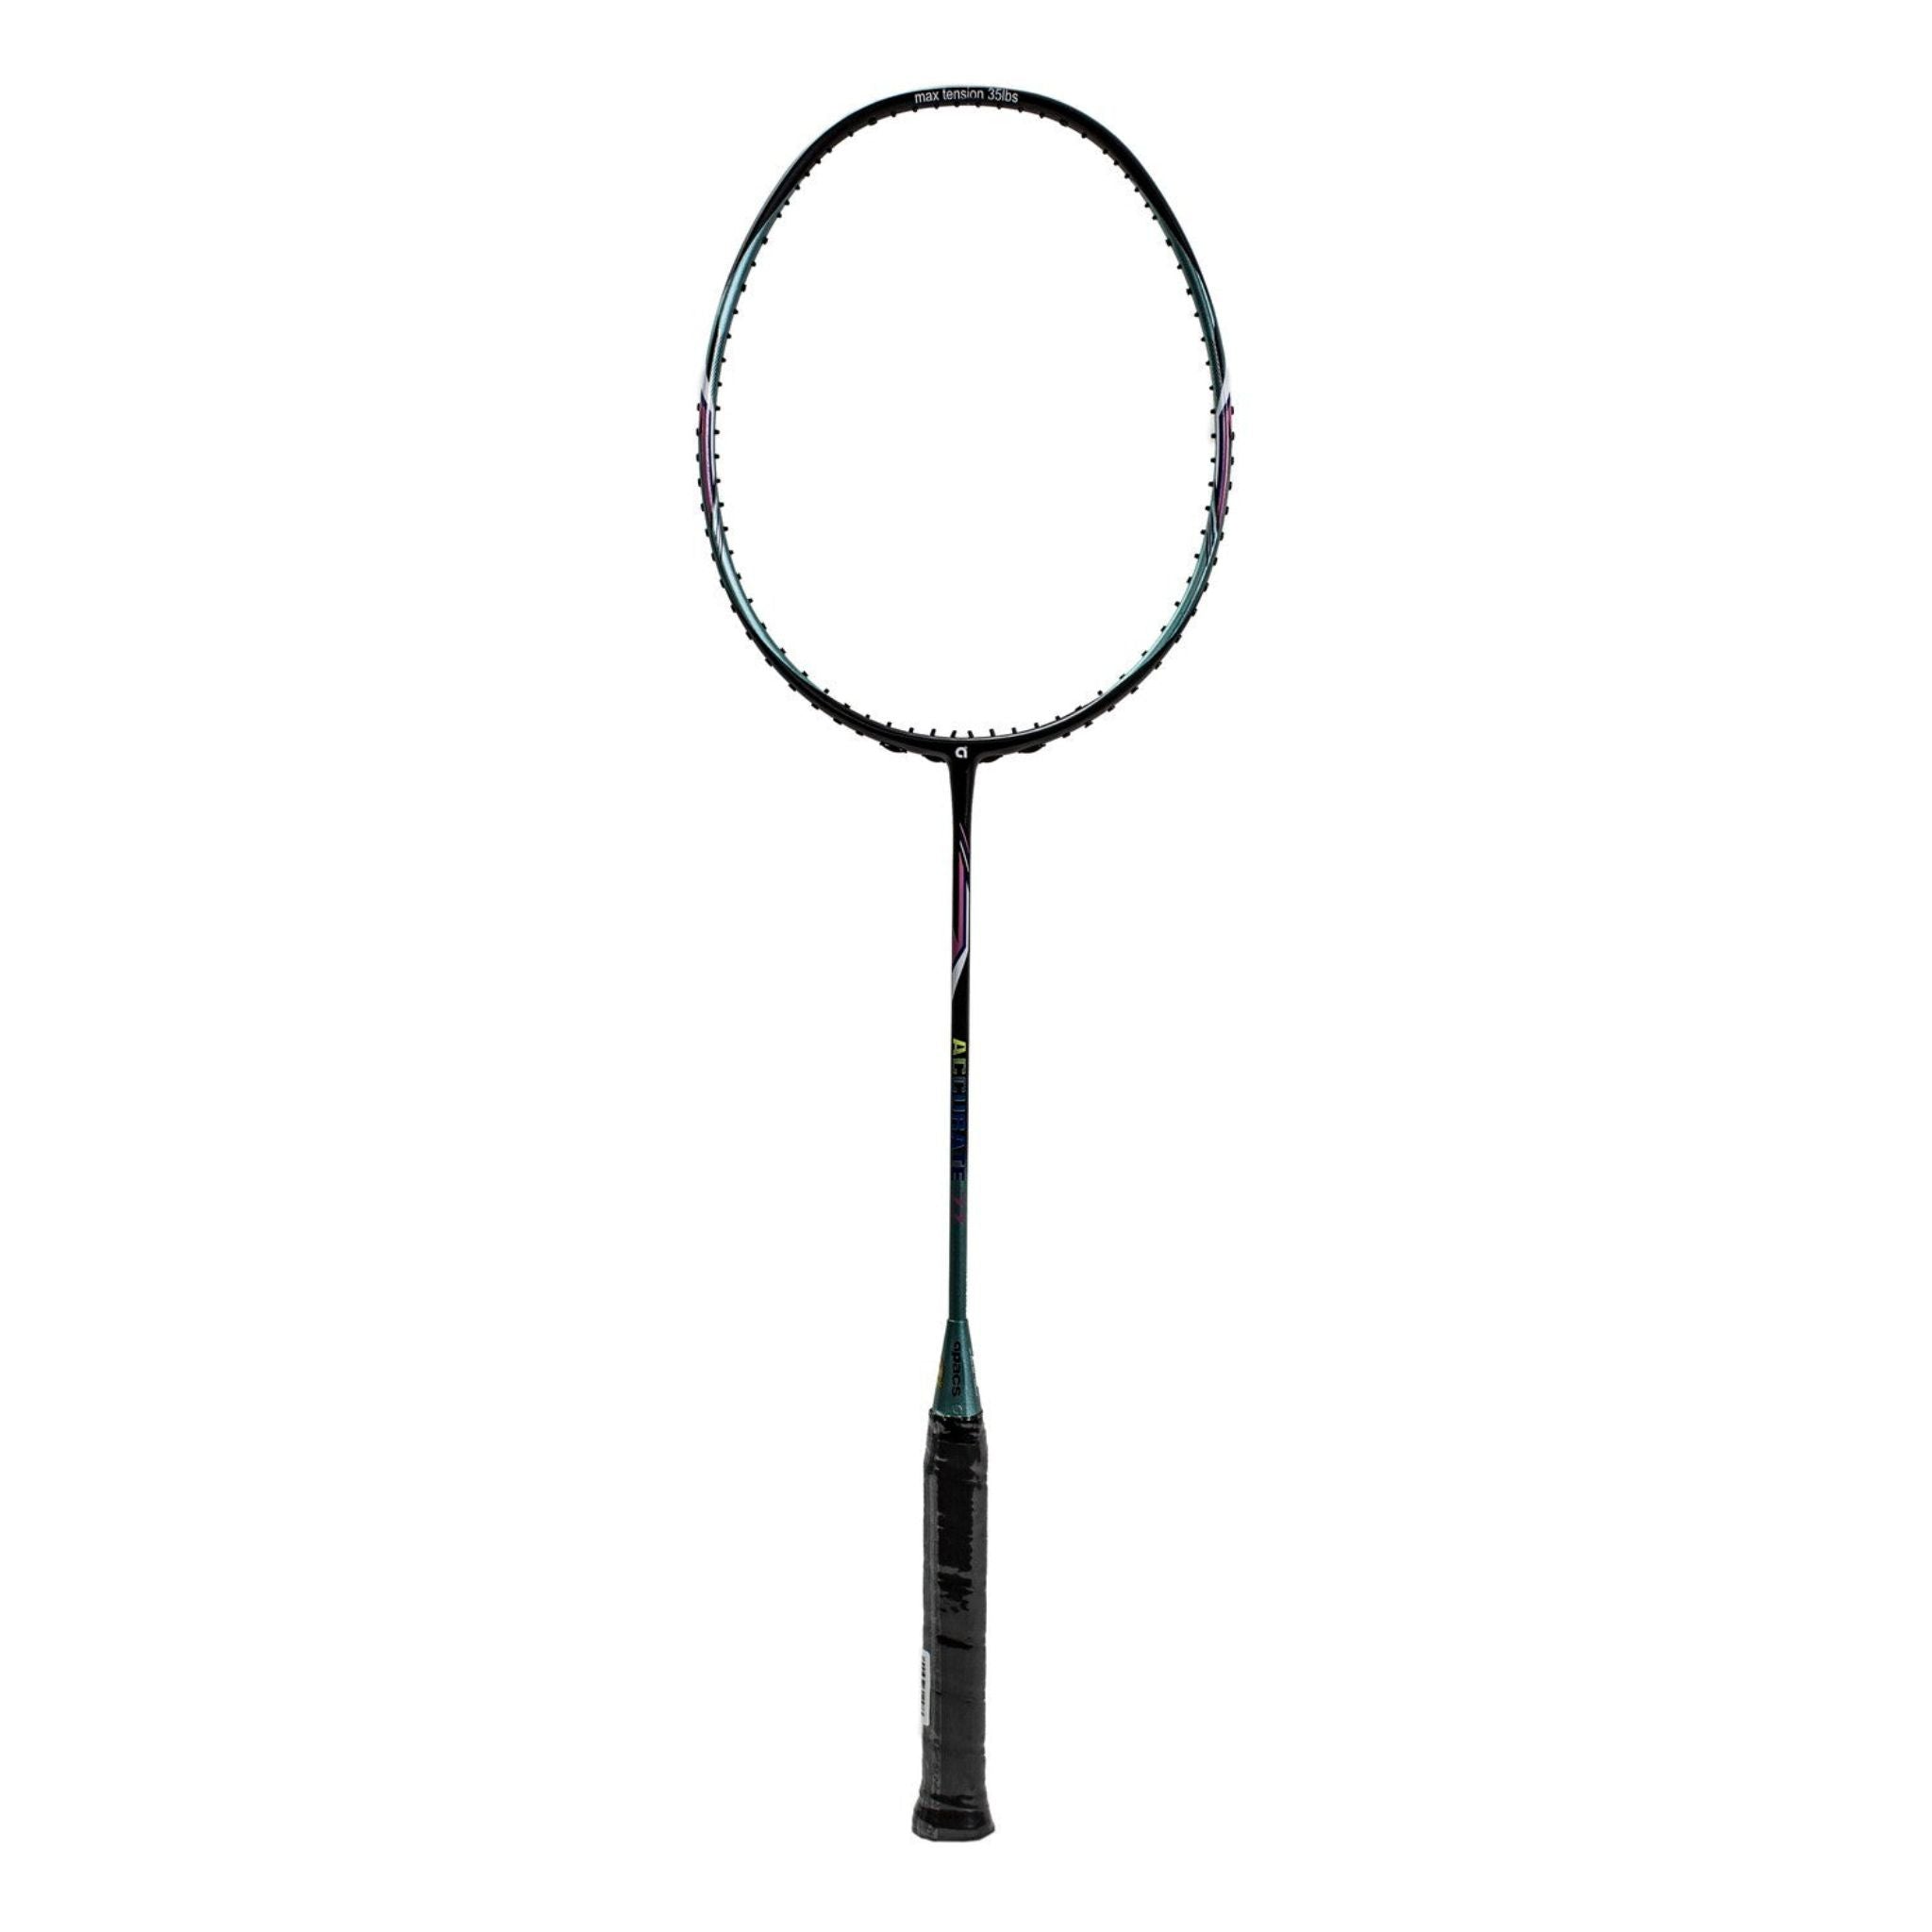 Which badminton grips do I need? - KW FLEX racket specialist